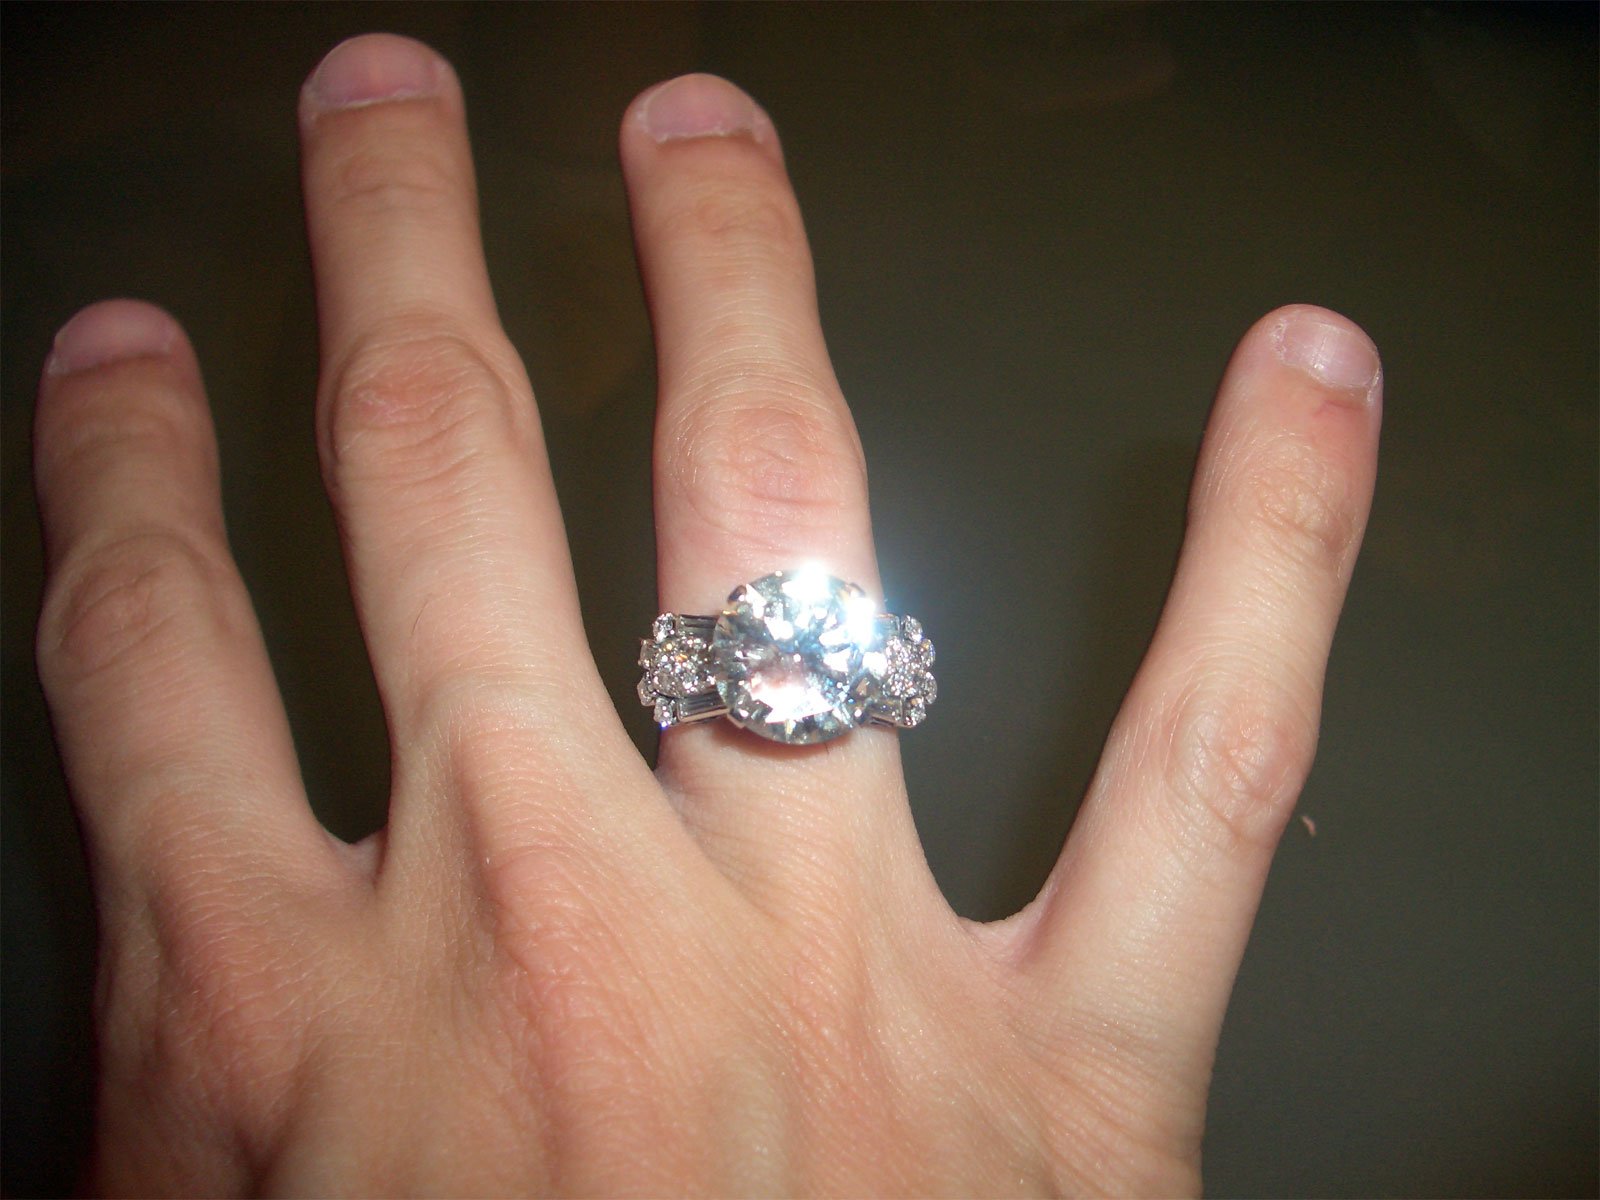 A large diamond ring. | Source: Flickr/Jonathan Khoo